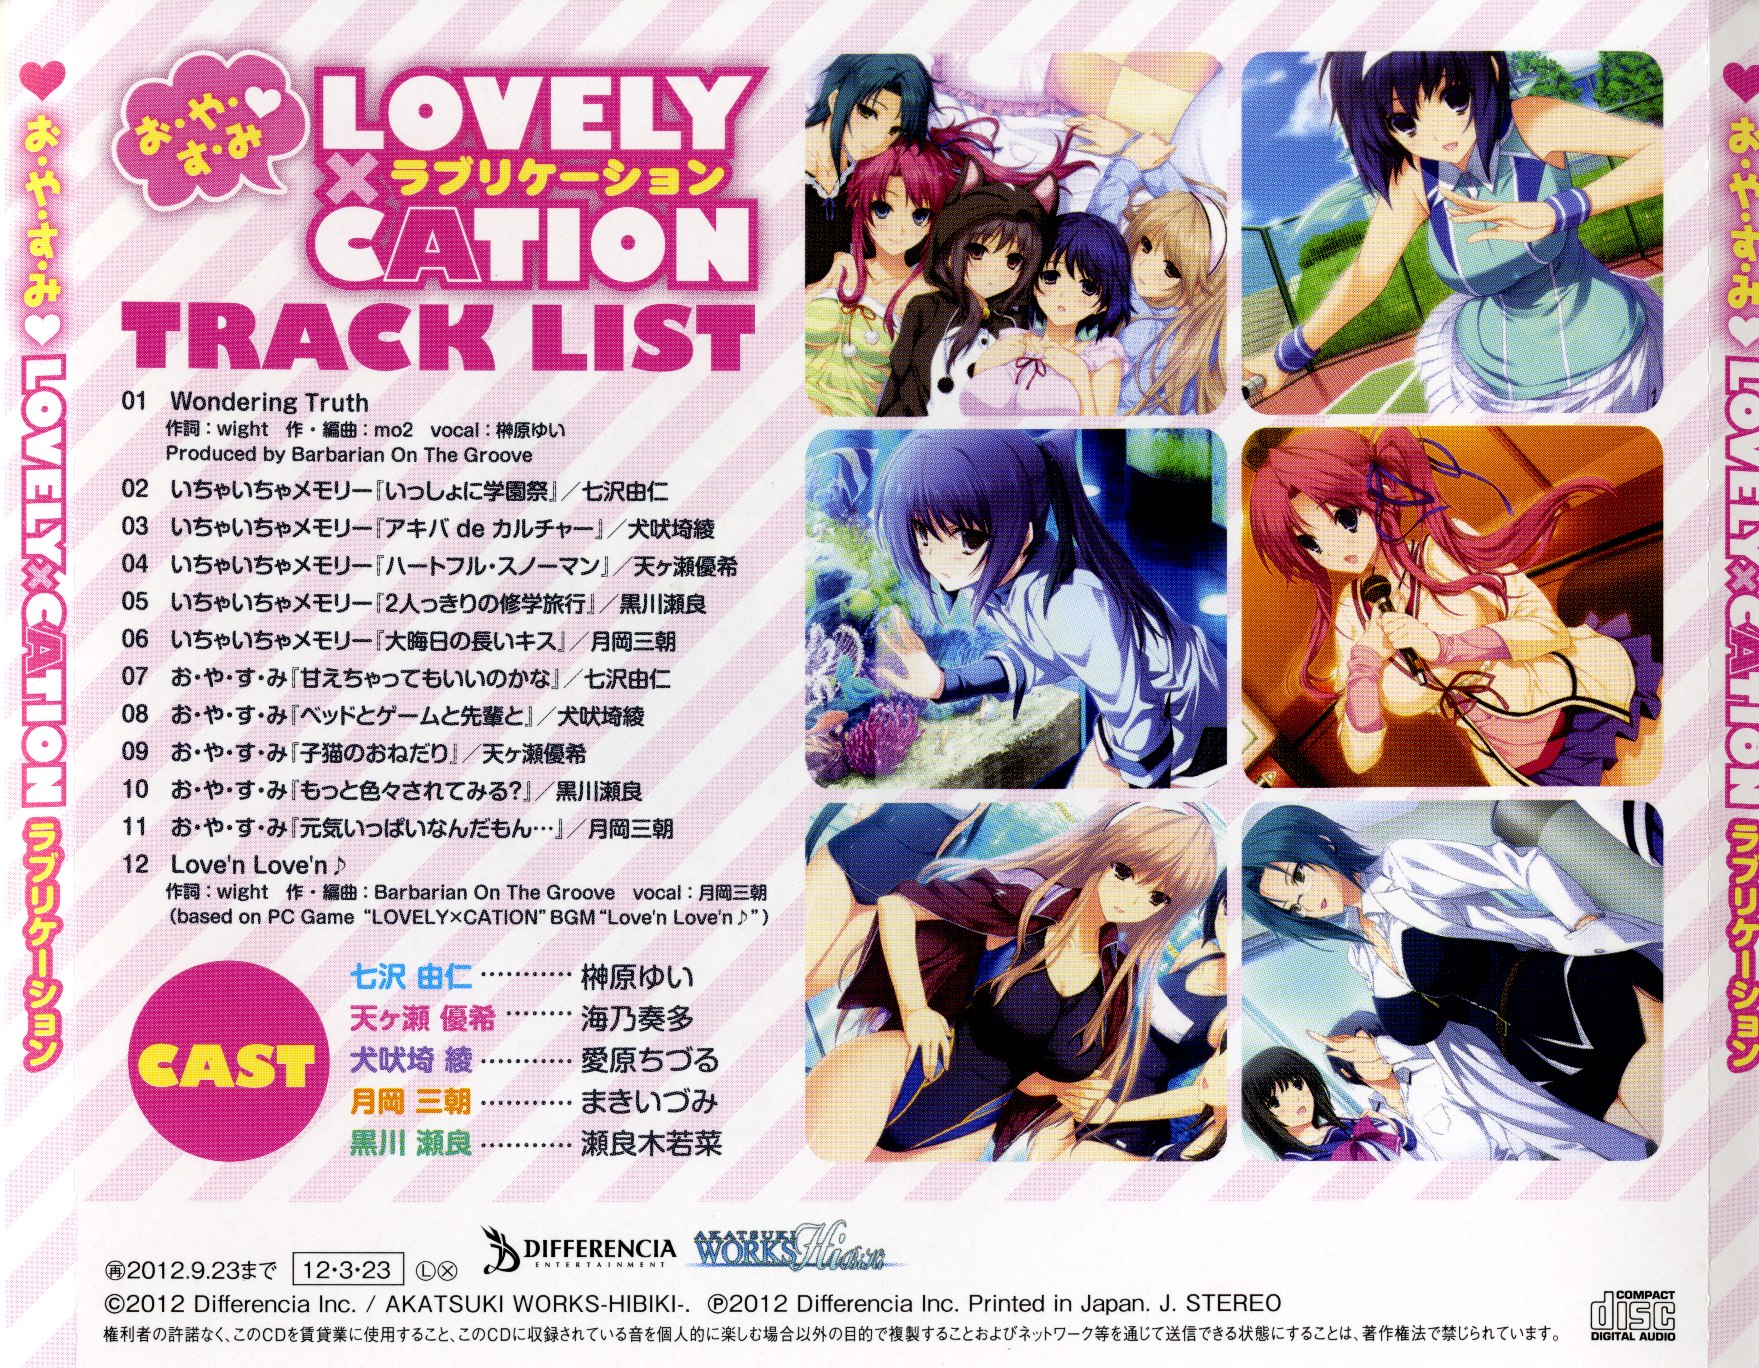 Lovely X Cation O Ya Su Mi Mp3 Download Lovely X Cation O Ya Su Mi Soundtracks For Free